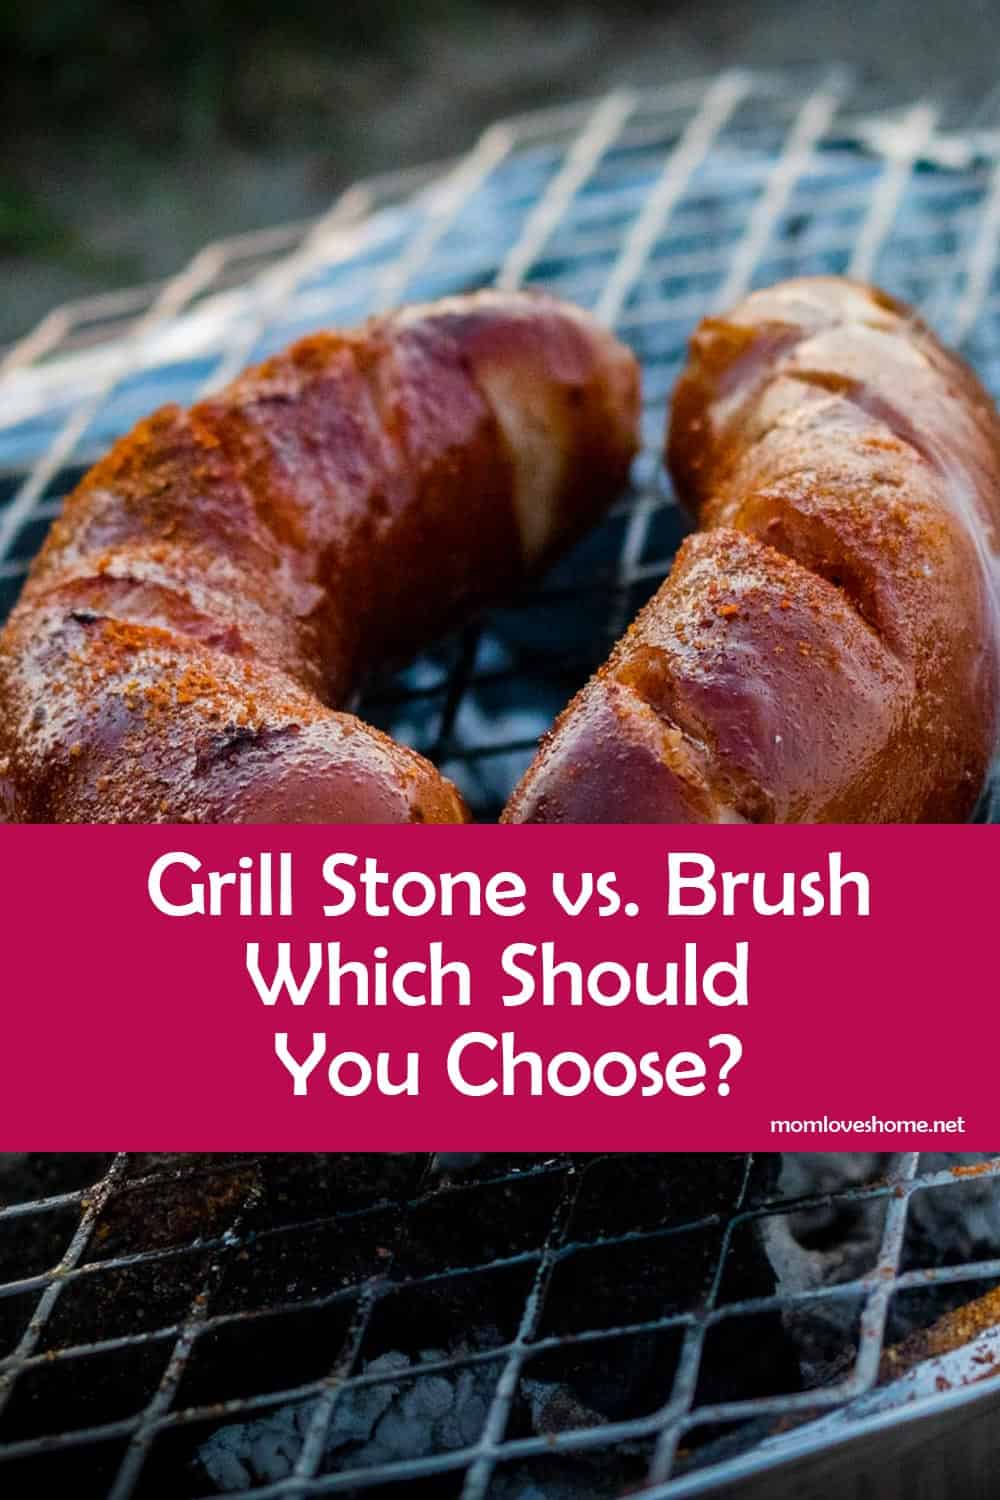 Grill Stone vs. Brush